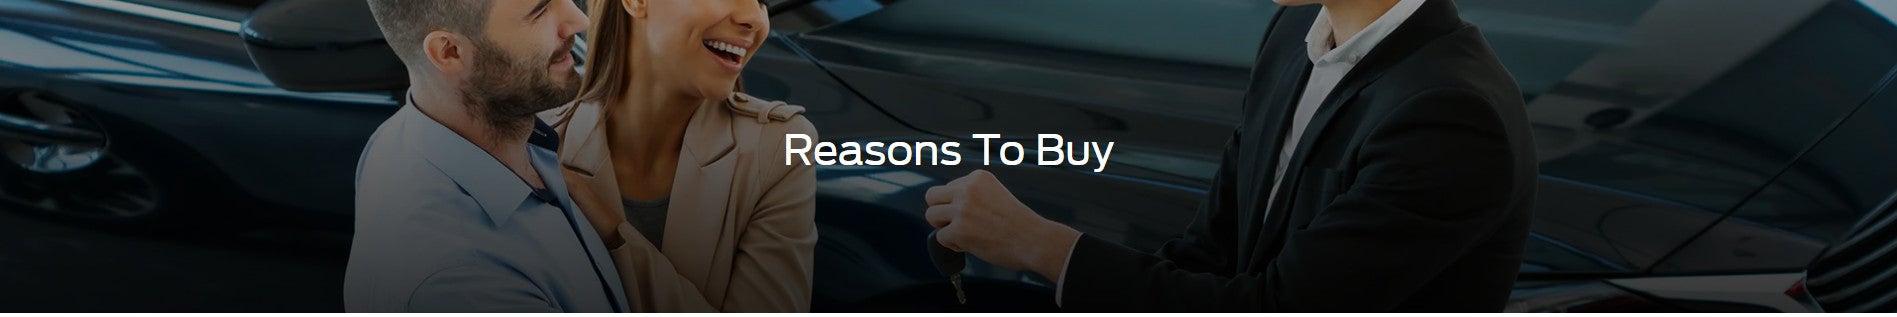 Reasons To Buy